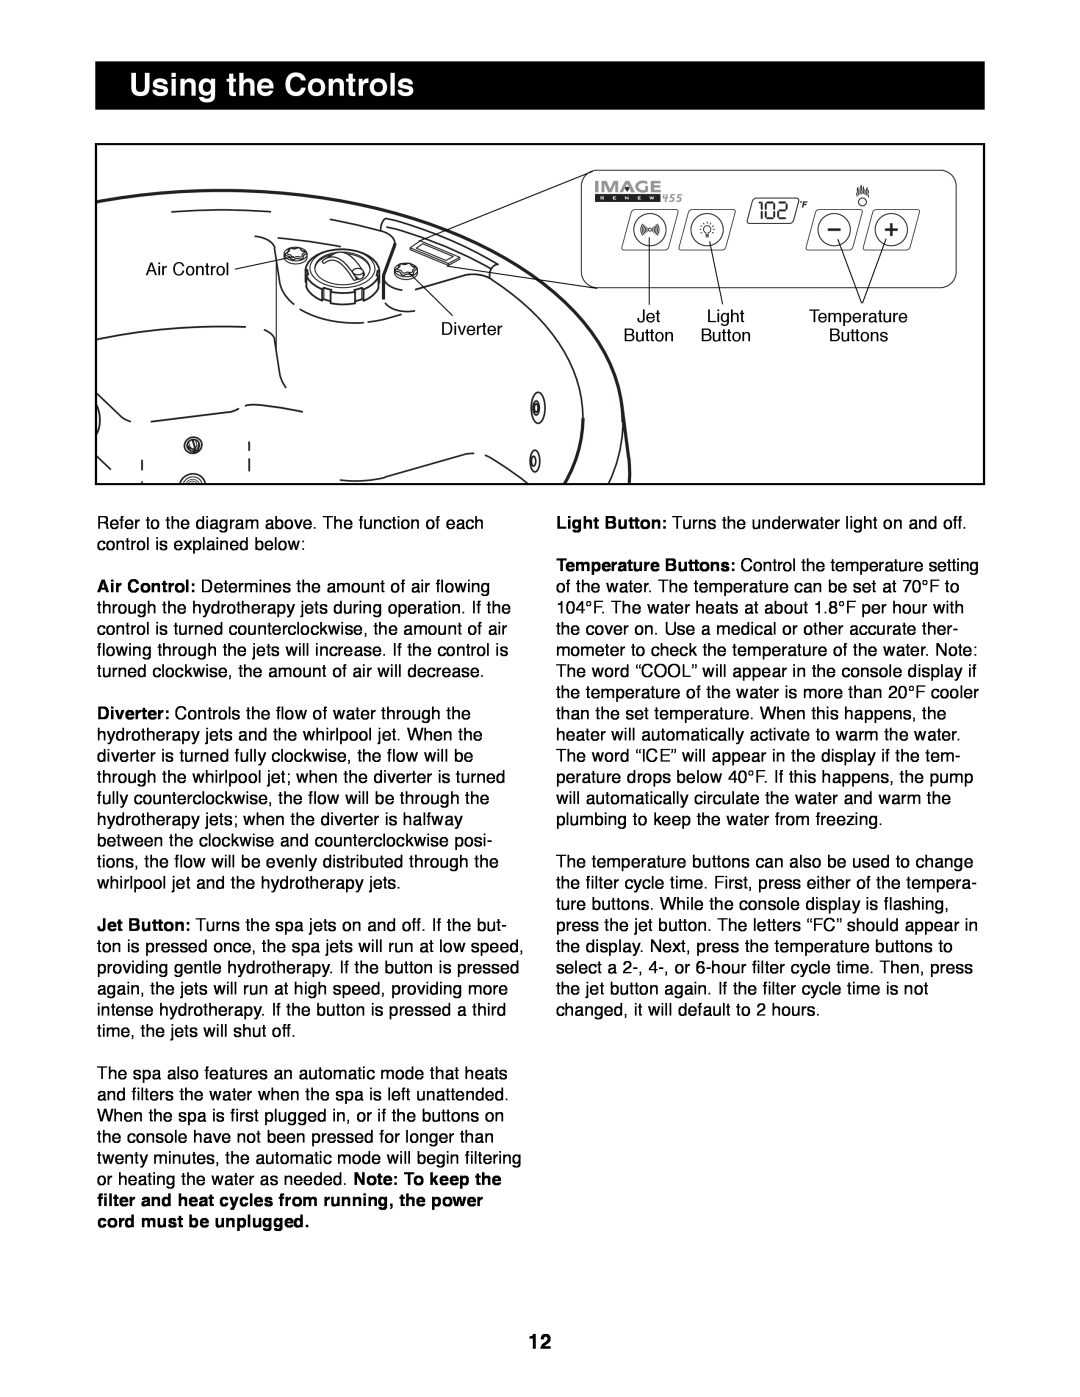 Image IMHS45590 manual Using the Controls 